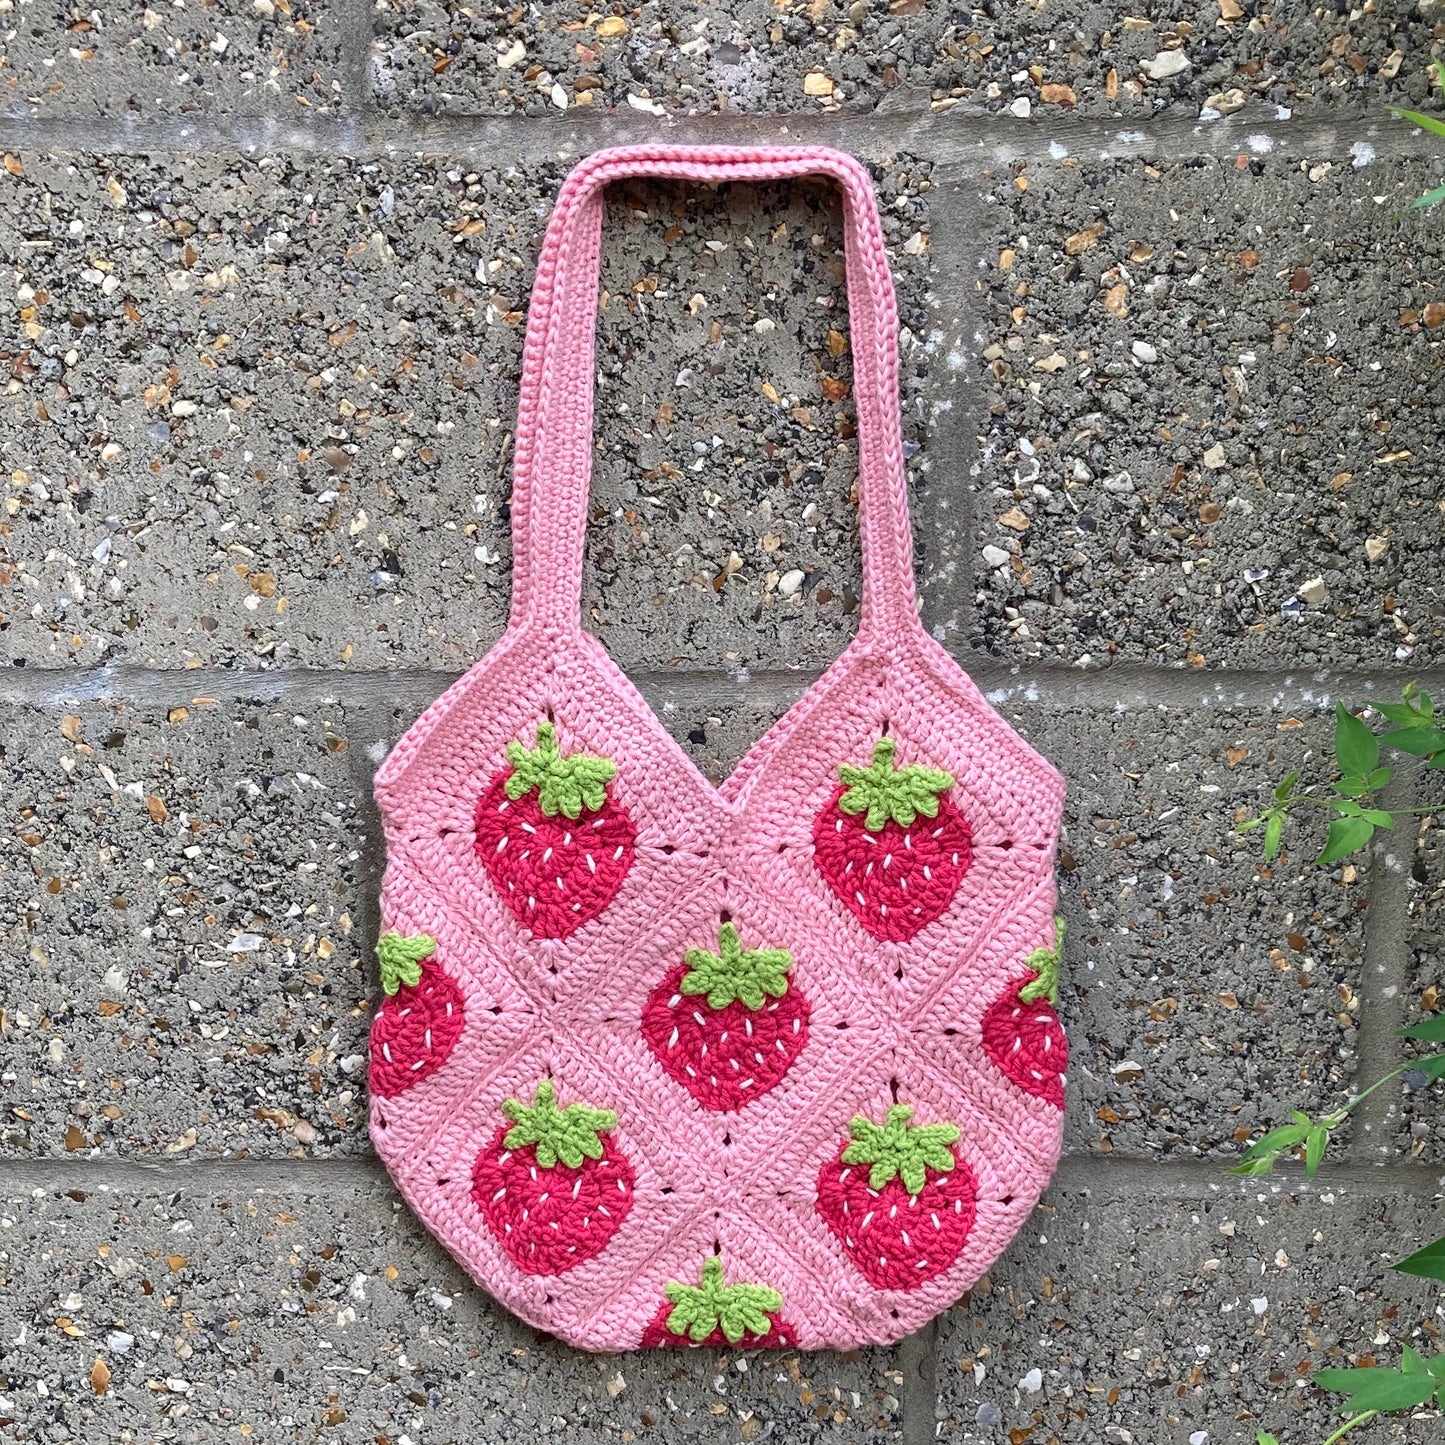 Strawberry Granny Square Crochet Shopper Bag